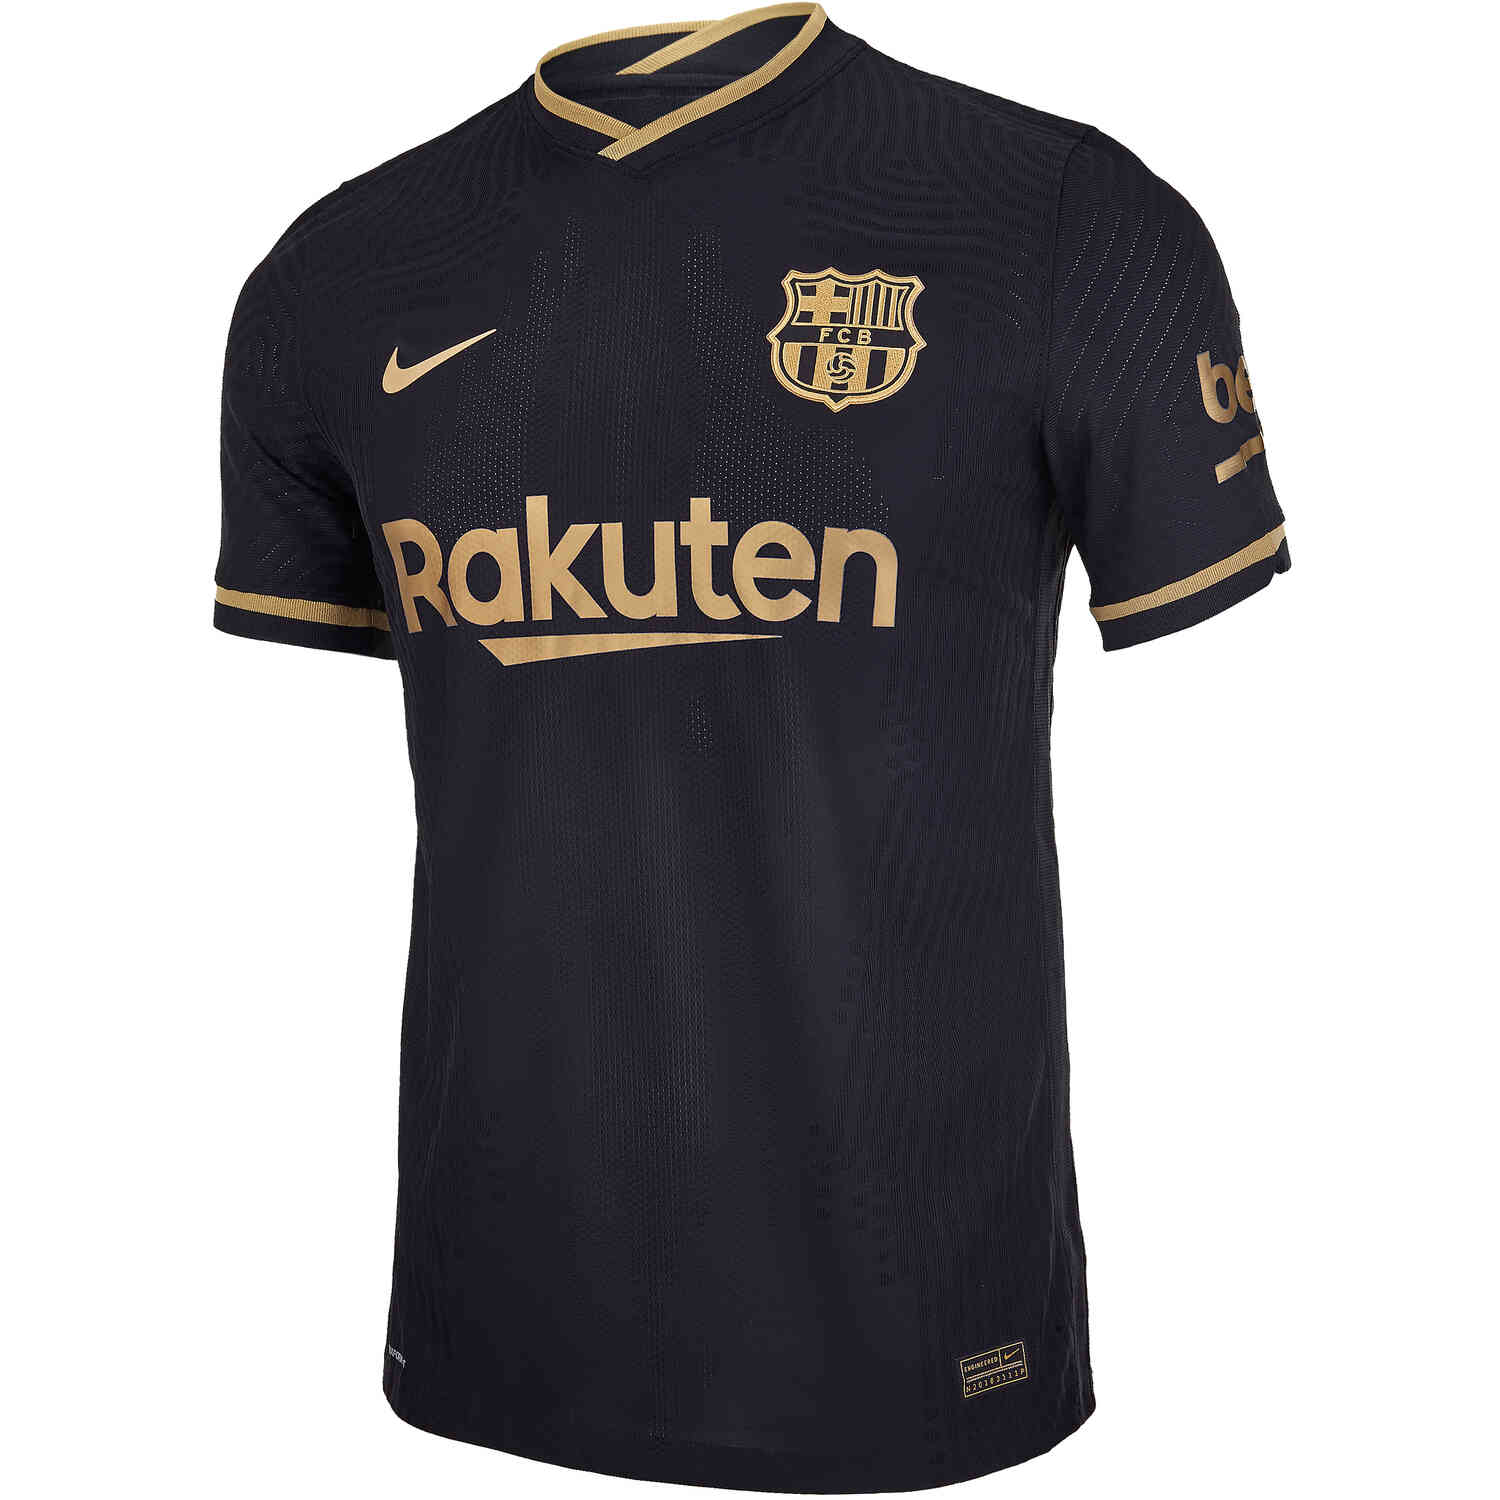 2020/21 Nike Barcelona Away Match Jersey - SoccerPro